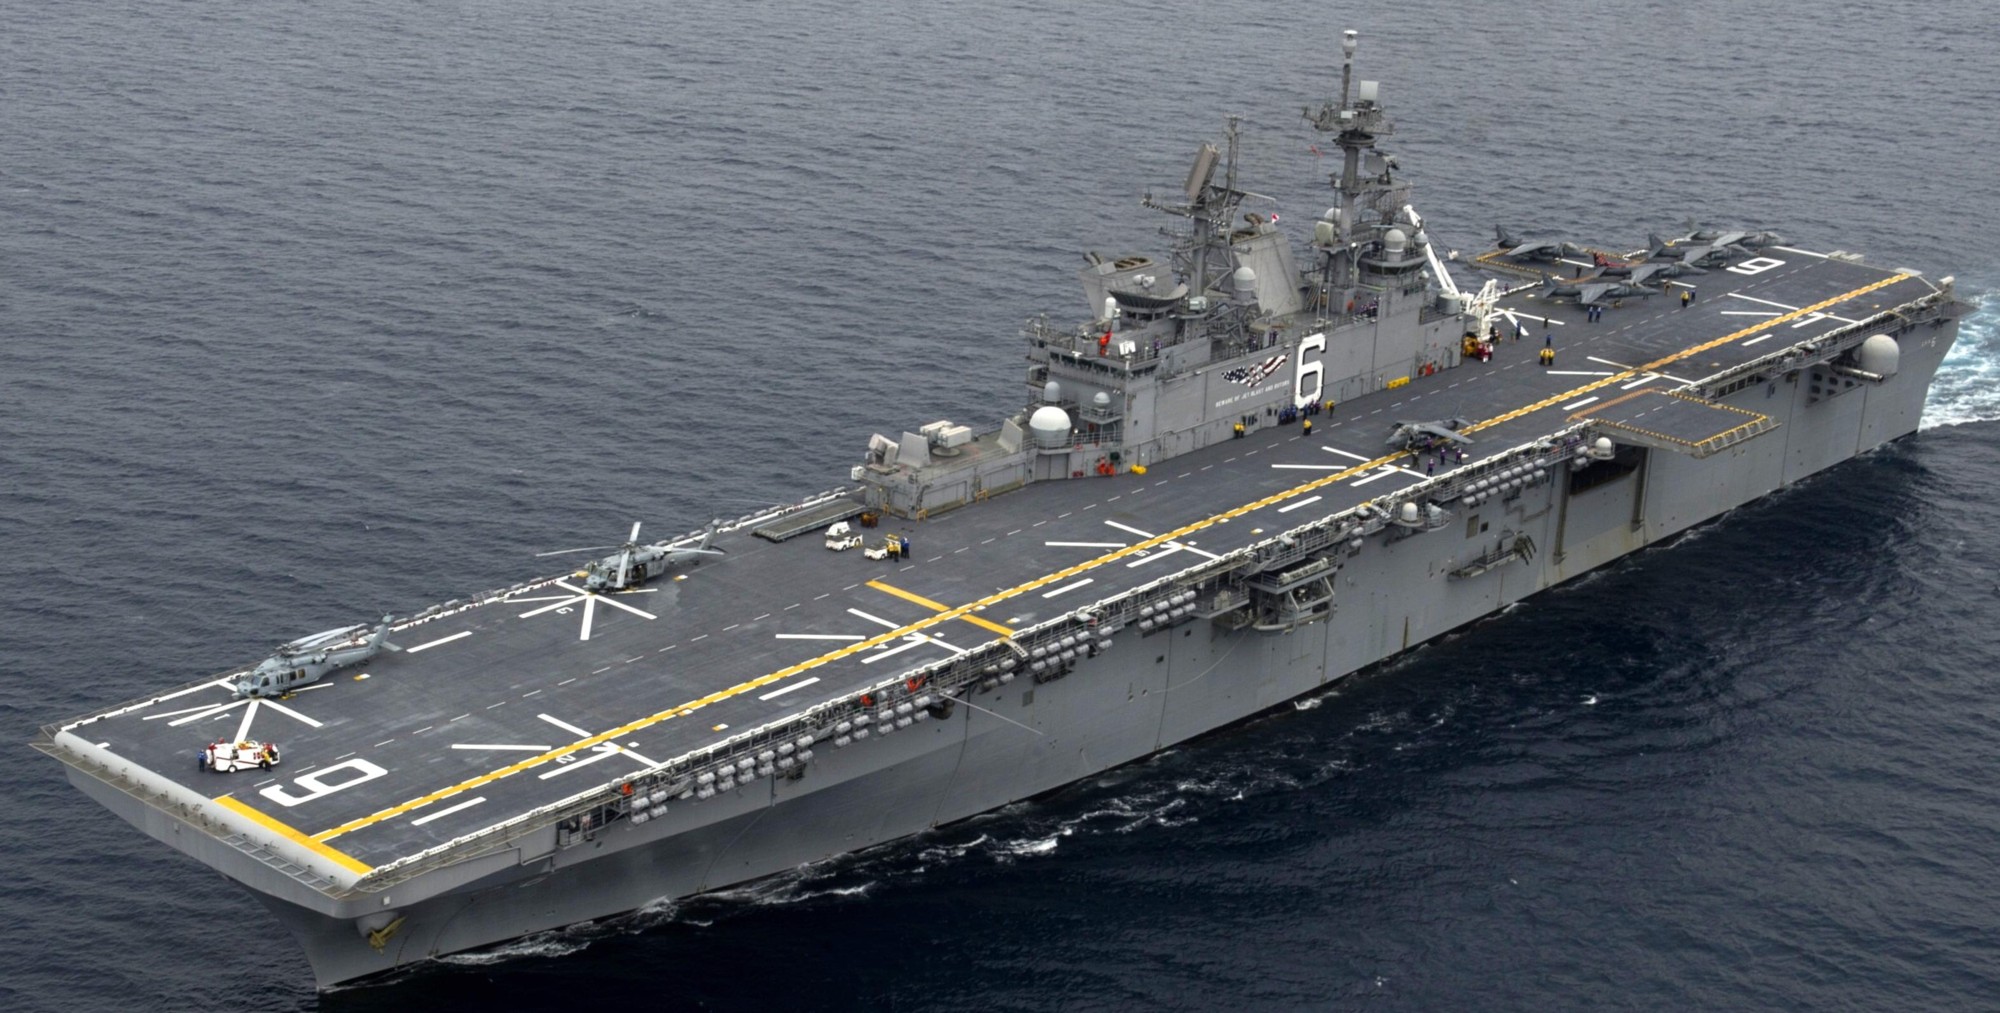 lha-6 uss america amphibious assault ship us navy 69